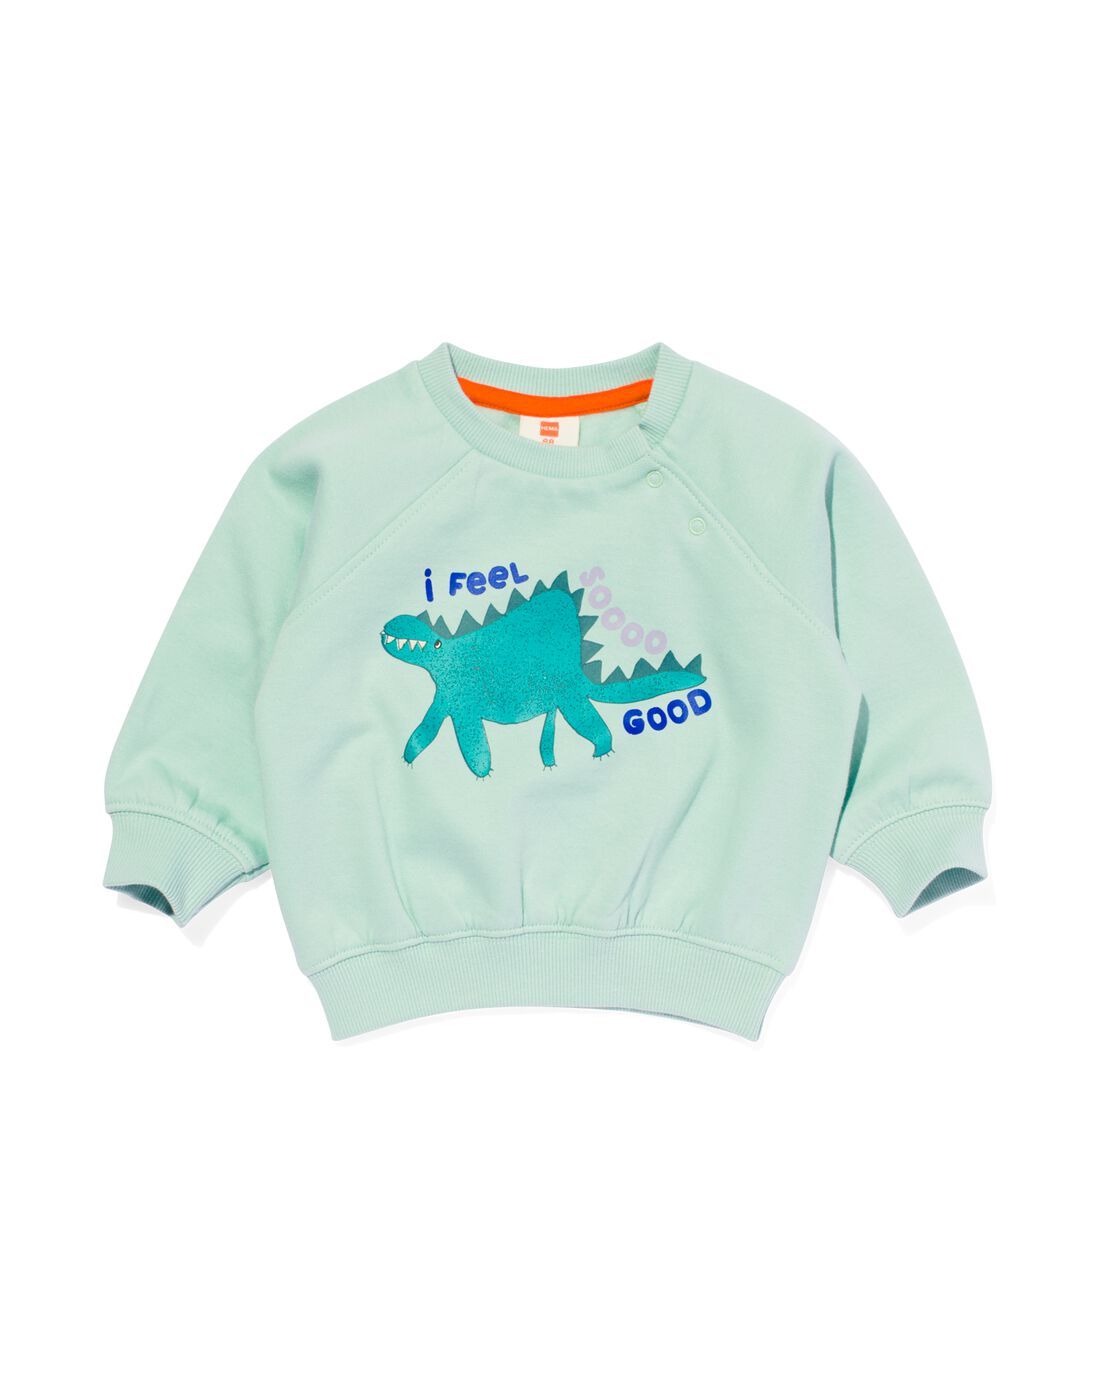 HEMA Baby Sweater Dino Mintgroen (mintgroen)